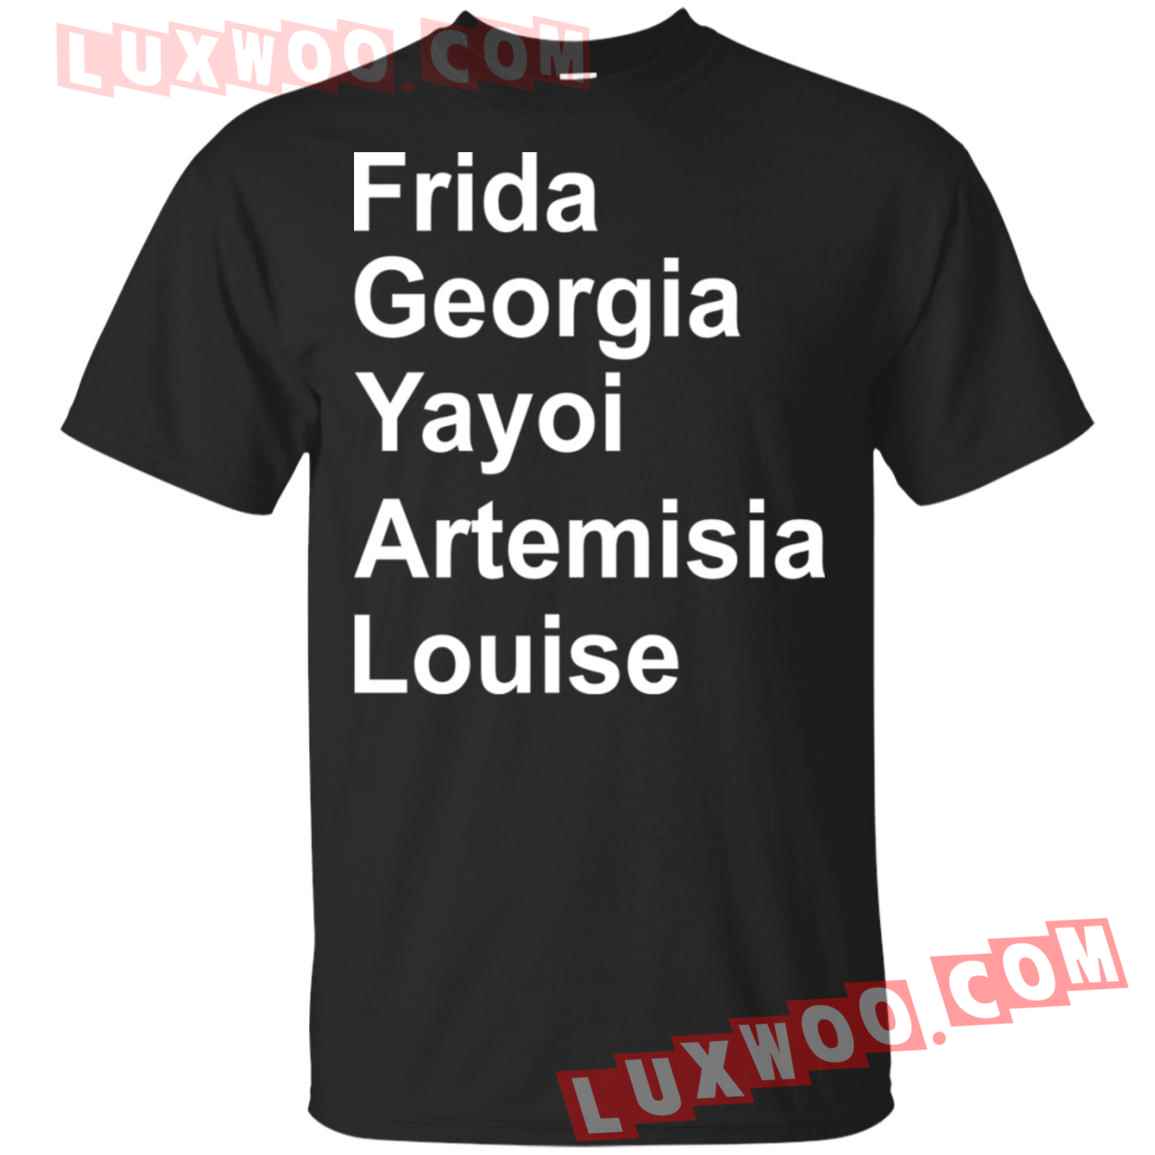 Frida Georgia Yayoi Artemisia Louise Shirt